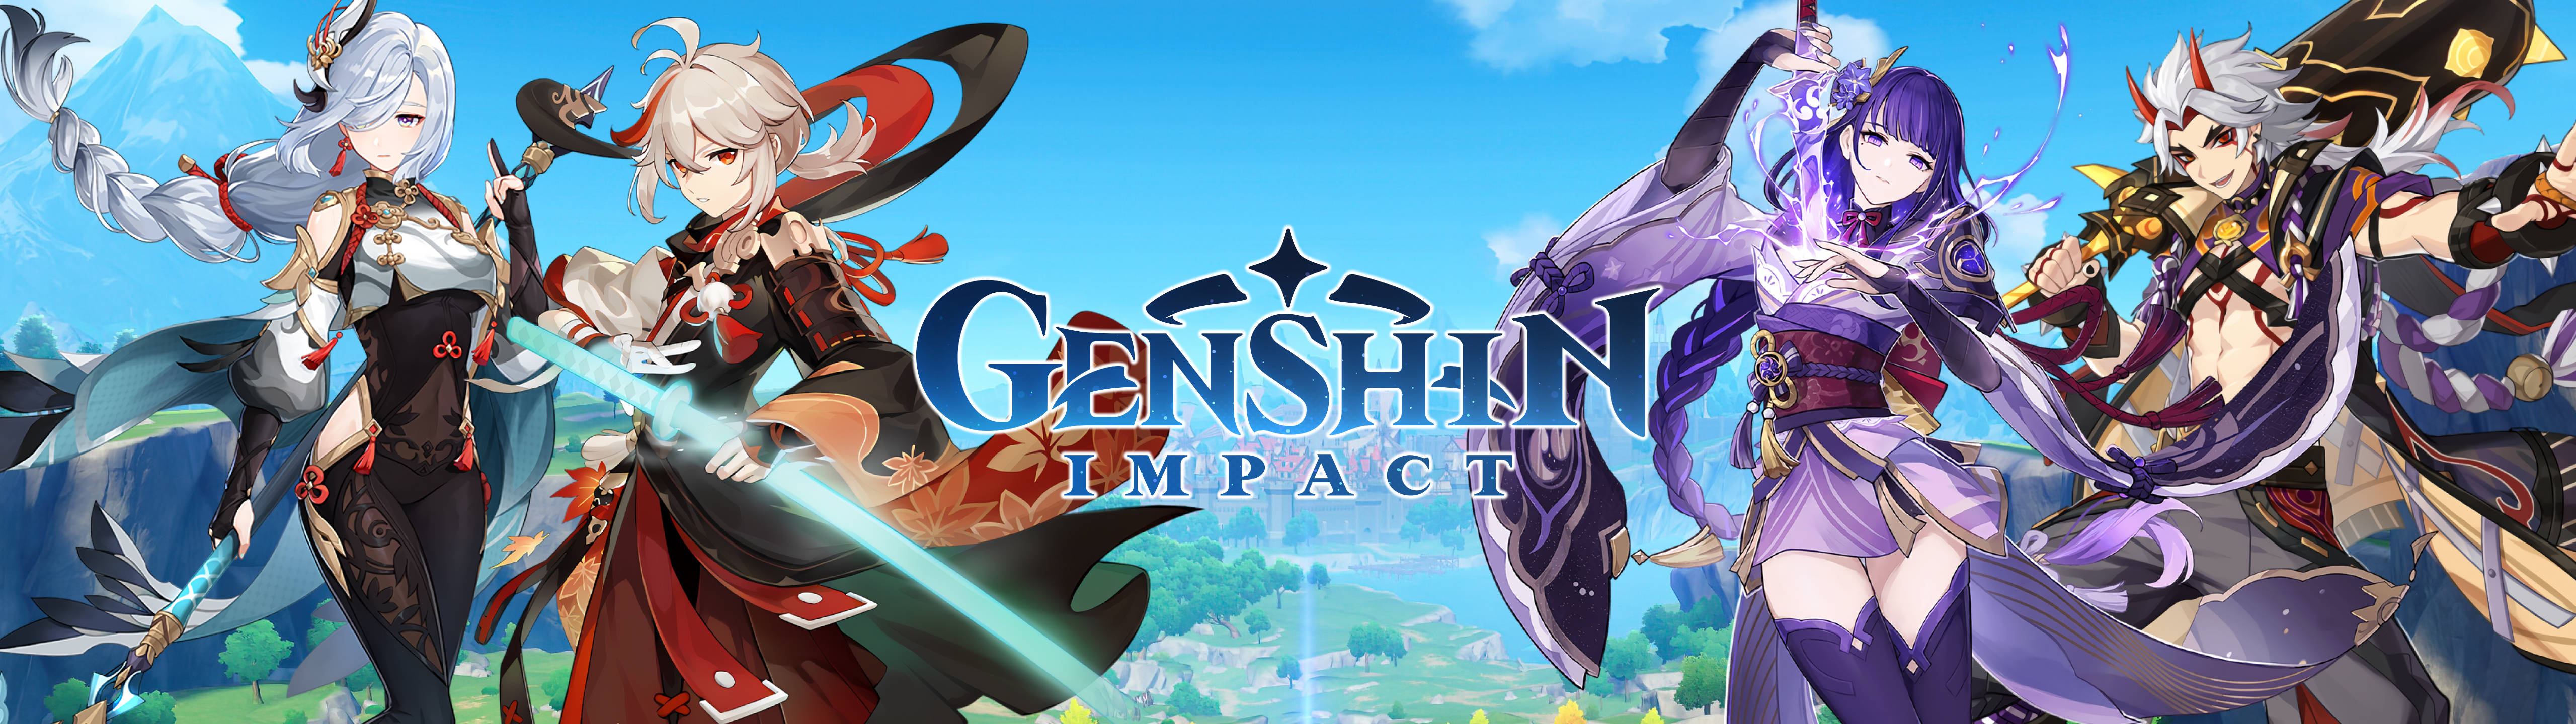 Genshin Impact New Characters 5120x1440 Gaming Wallpaper